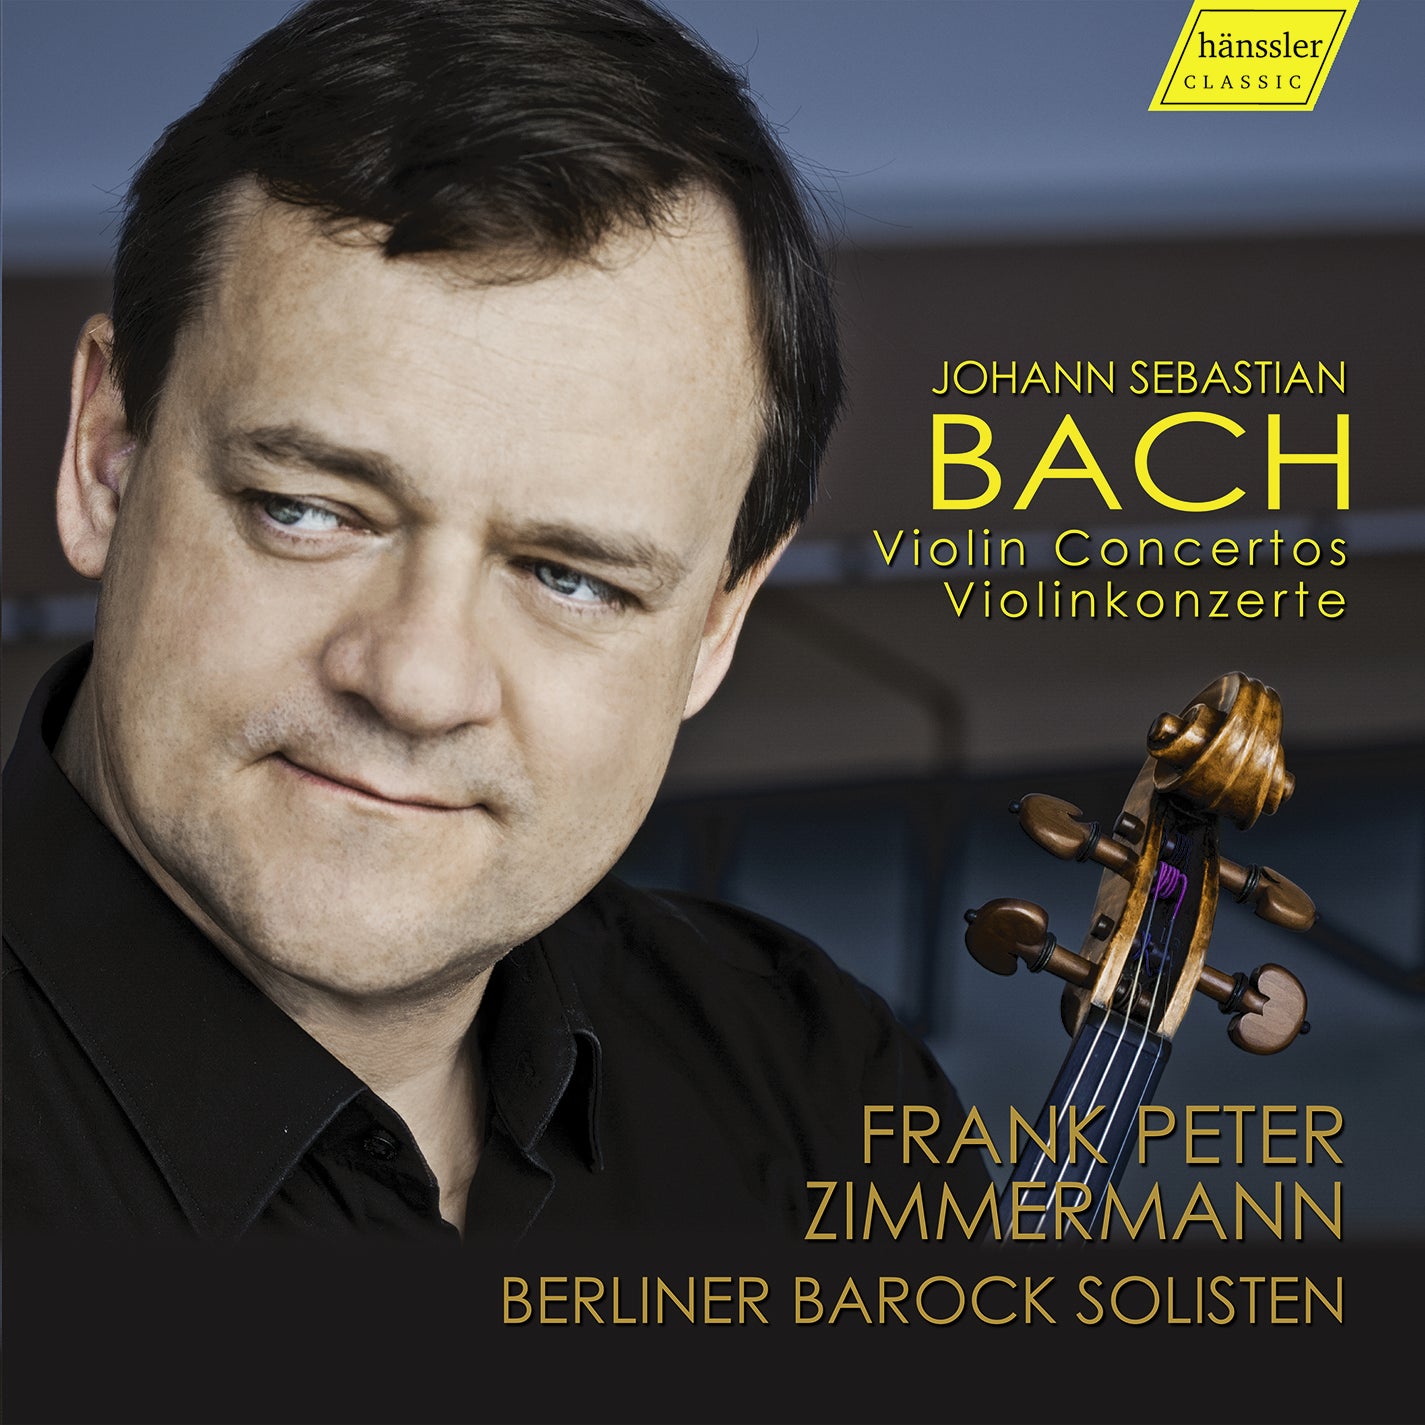 Bach: Violin Concertos on Vinyl / F.P. Zimmermann, Berlin Baroque Soloists